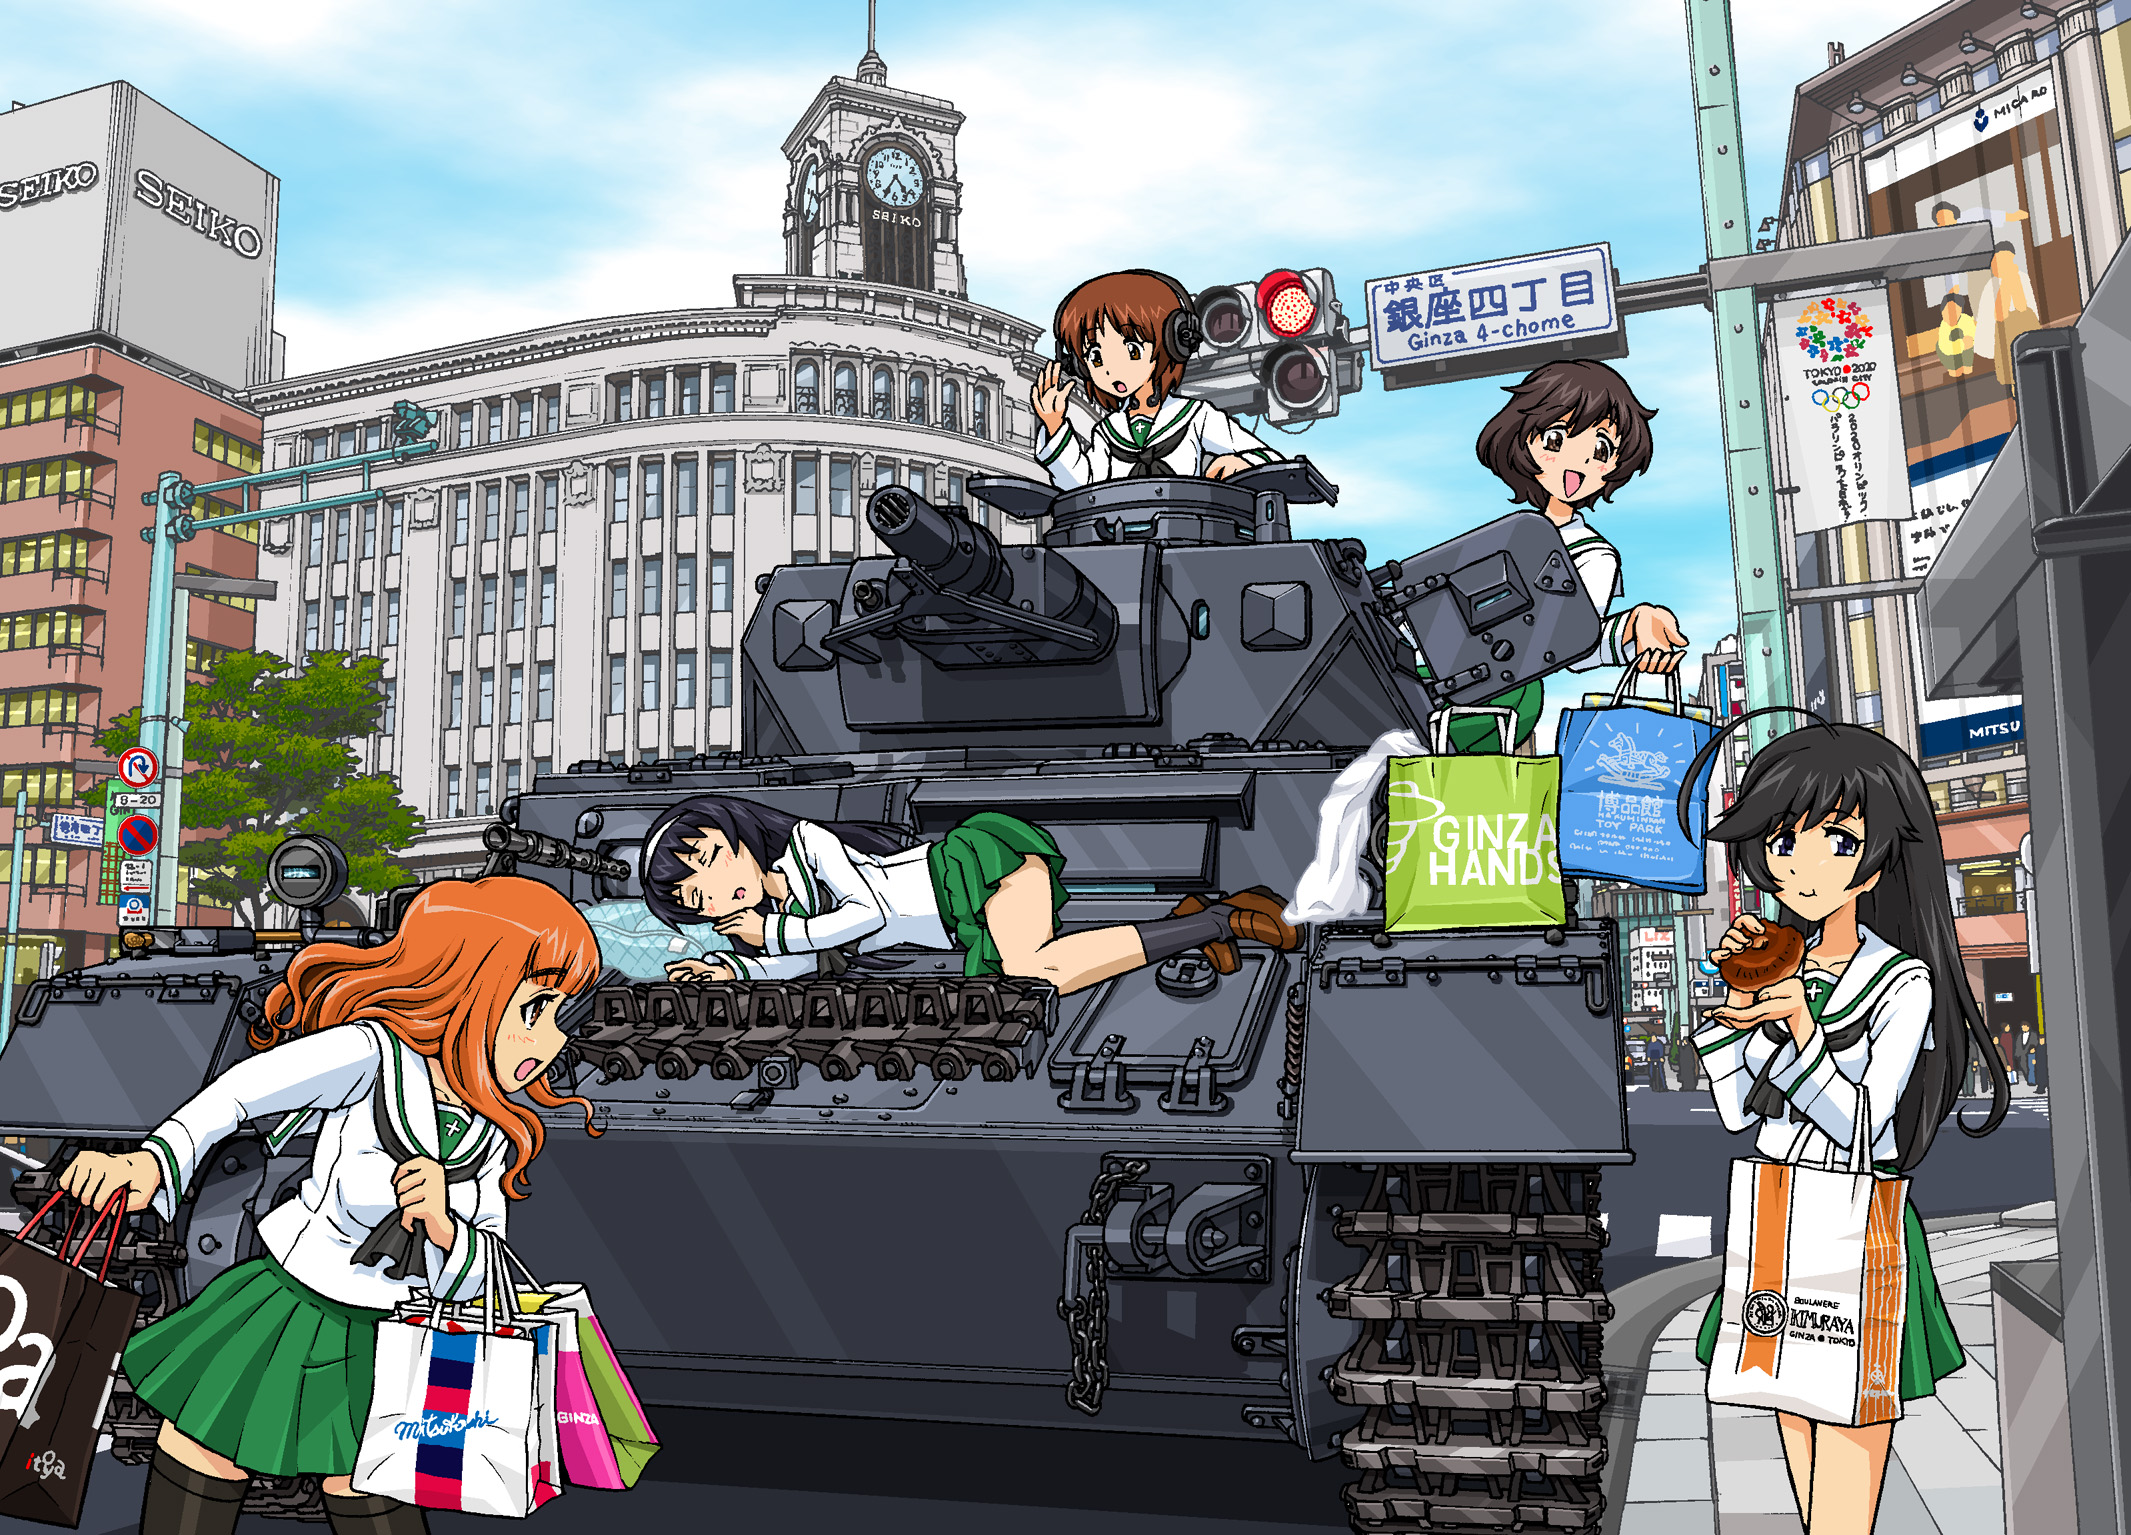 Girls Und Panzer Encyclopedia Anime Manga Art Book 2016 From Japan Ac053  for sale online | eBay